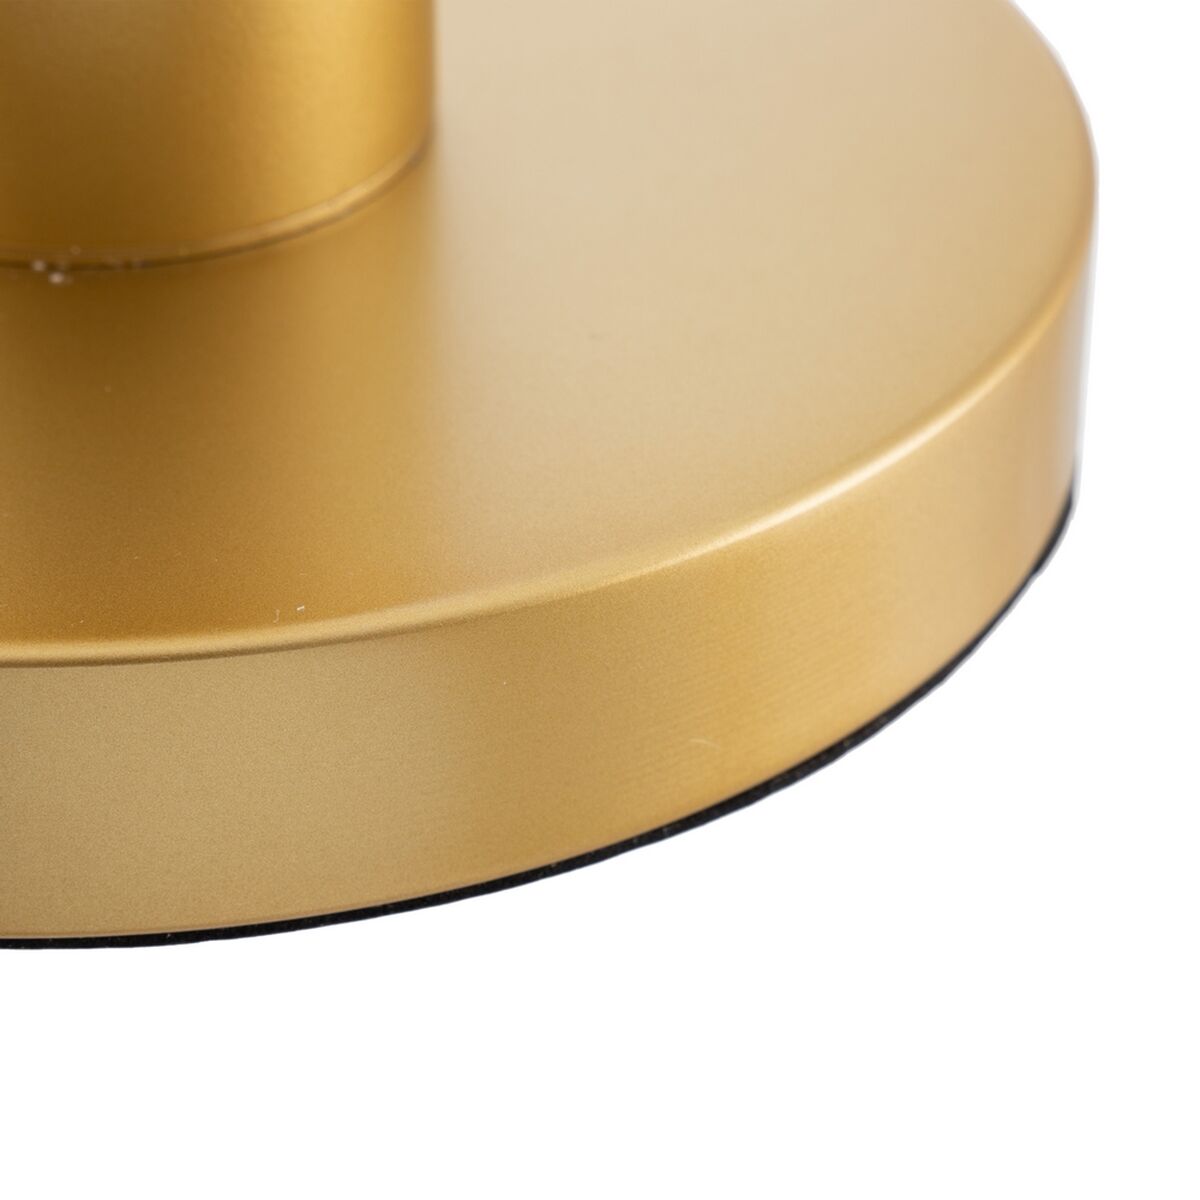 Table lamp premium golden & white metal